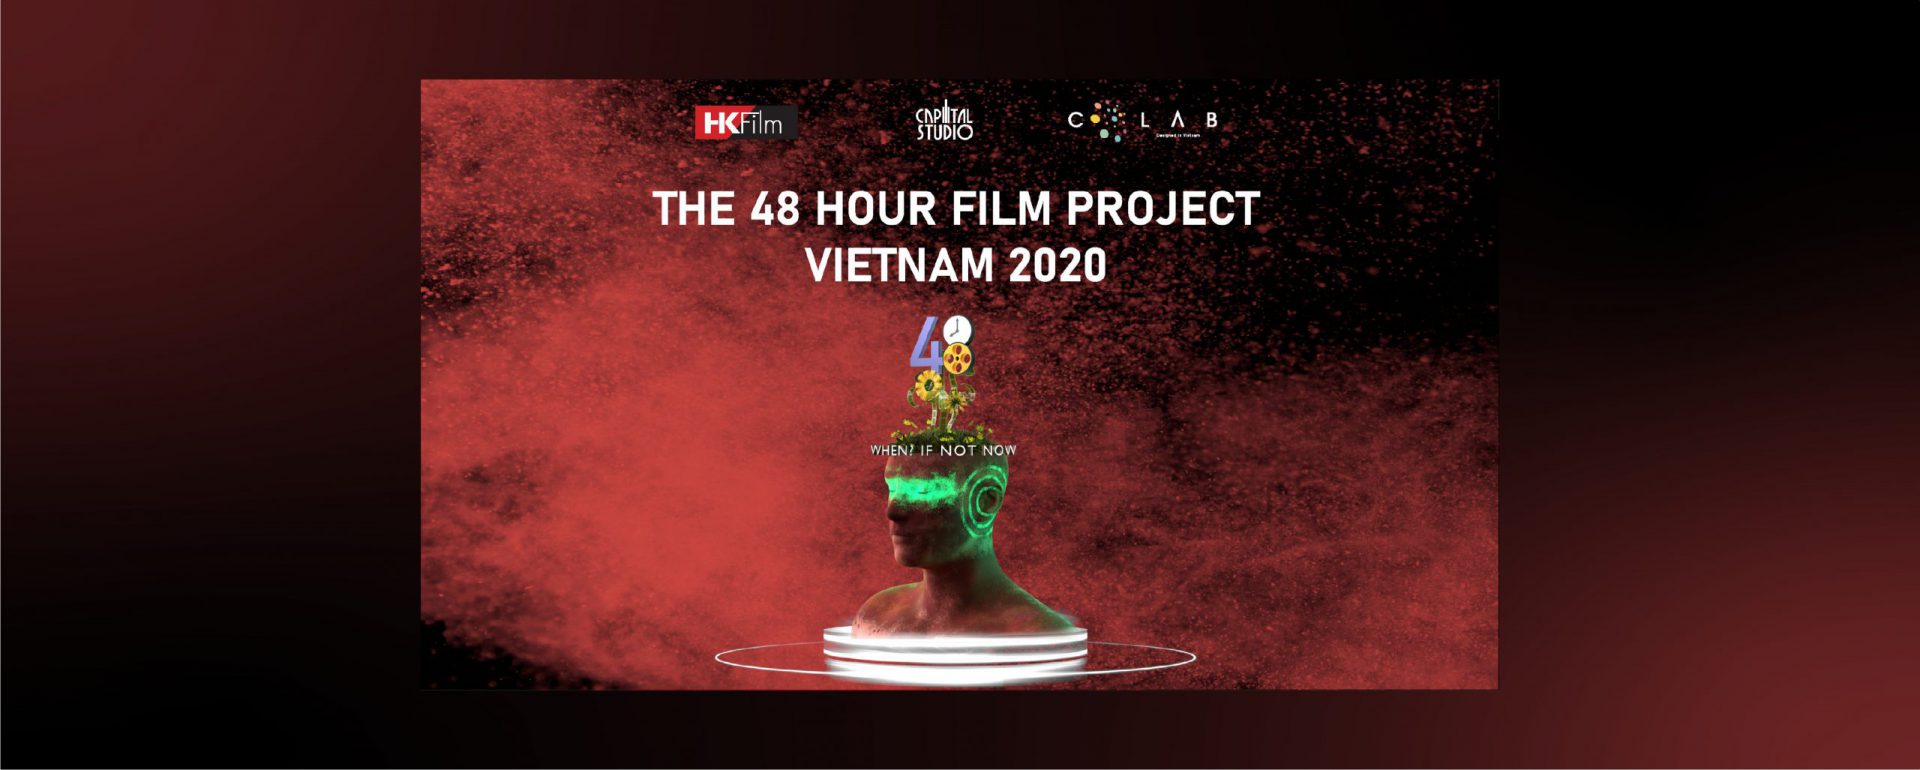 THE 48 HOUR FILM PROJECT VIETNAM 2020